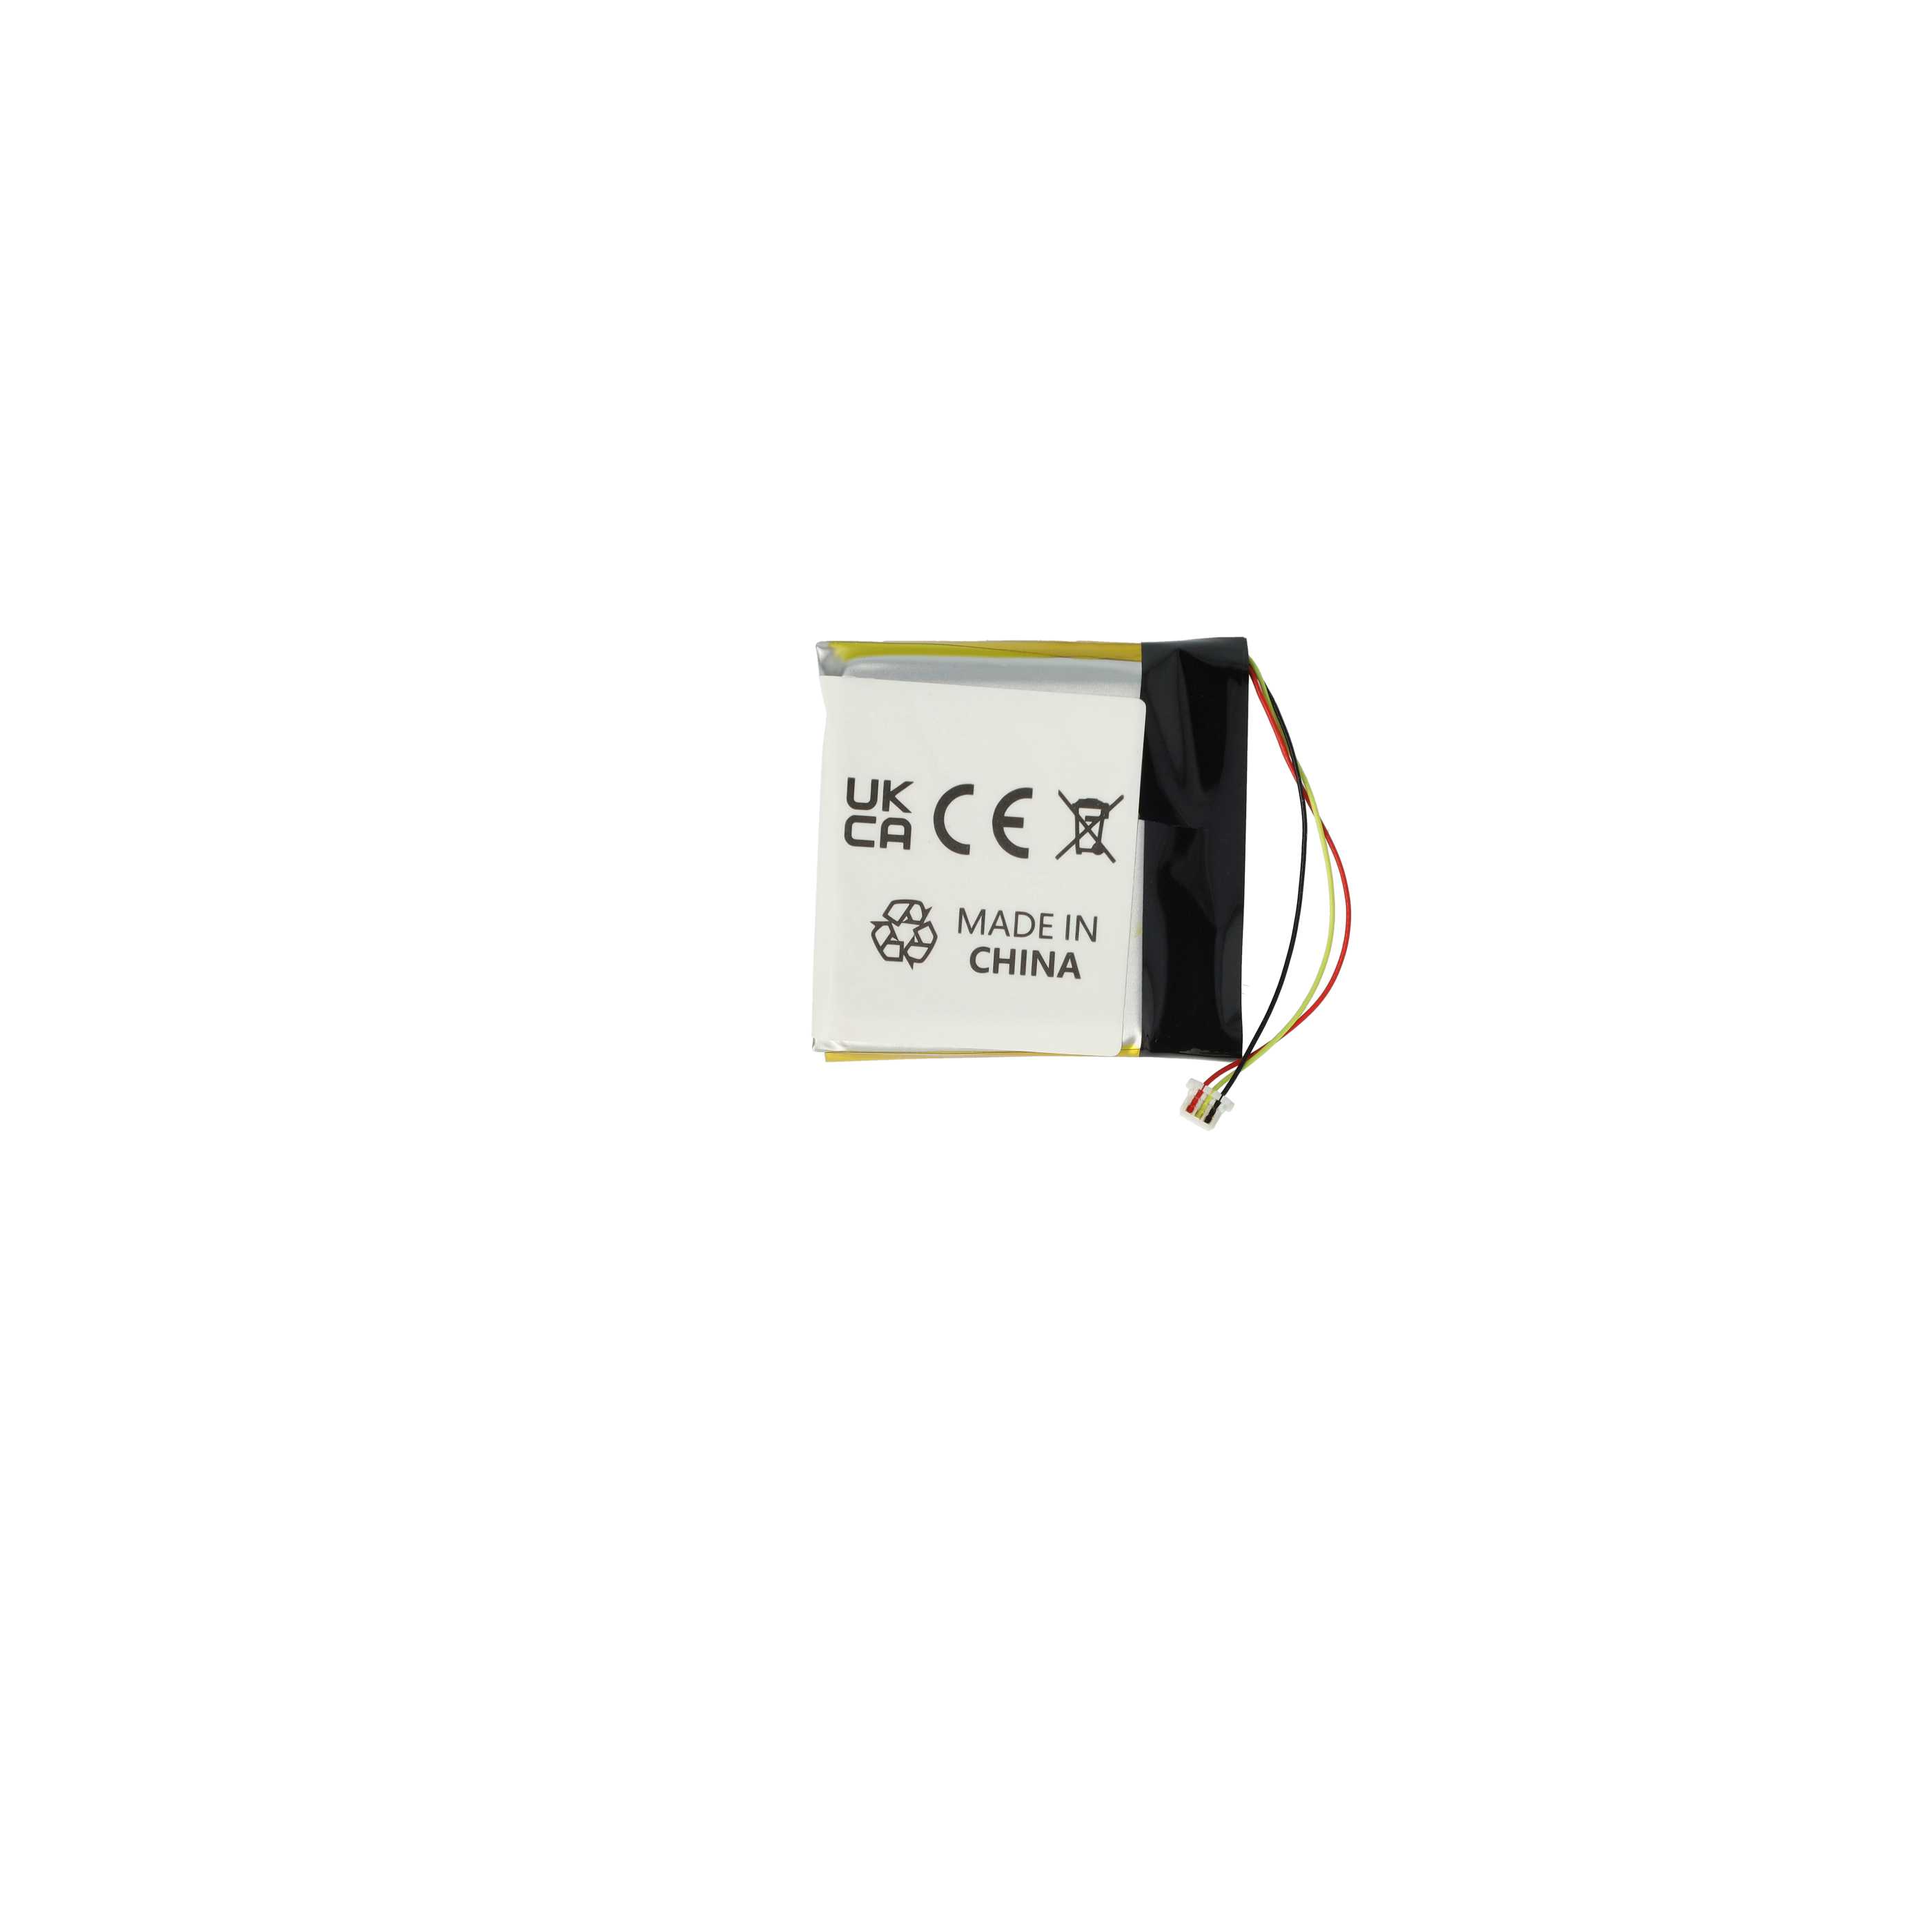 Wireless Headset Battery Replacement for Beats PA-BT05, AEC643333 - 560mAh 3.7V Li-polymer